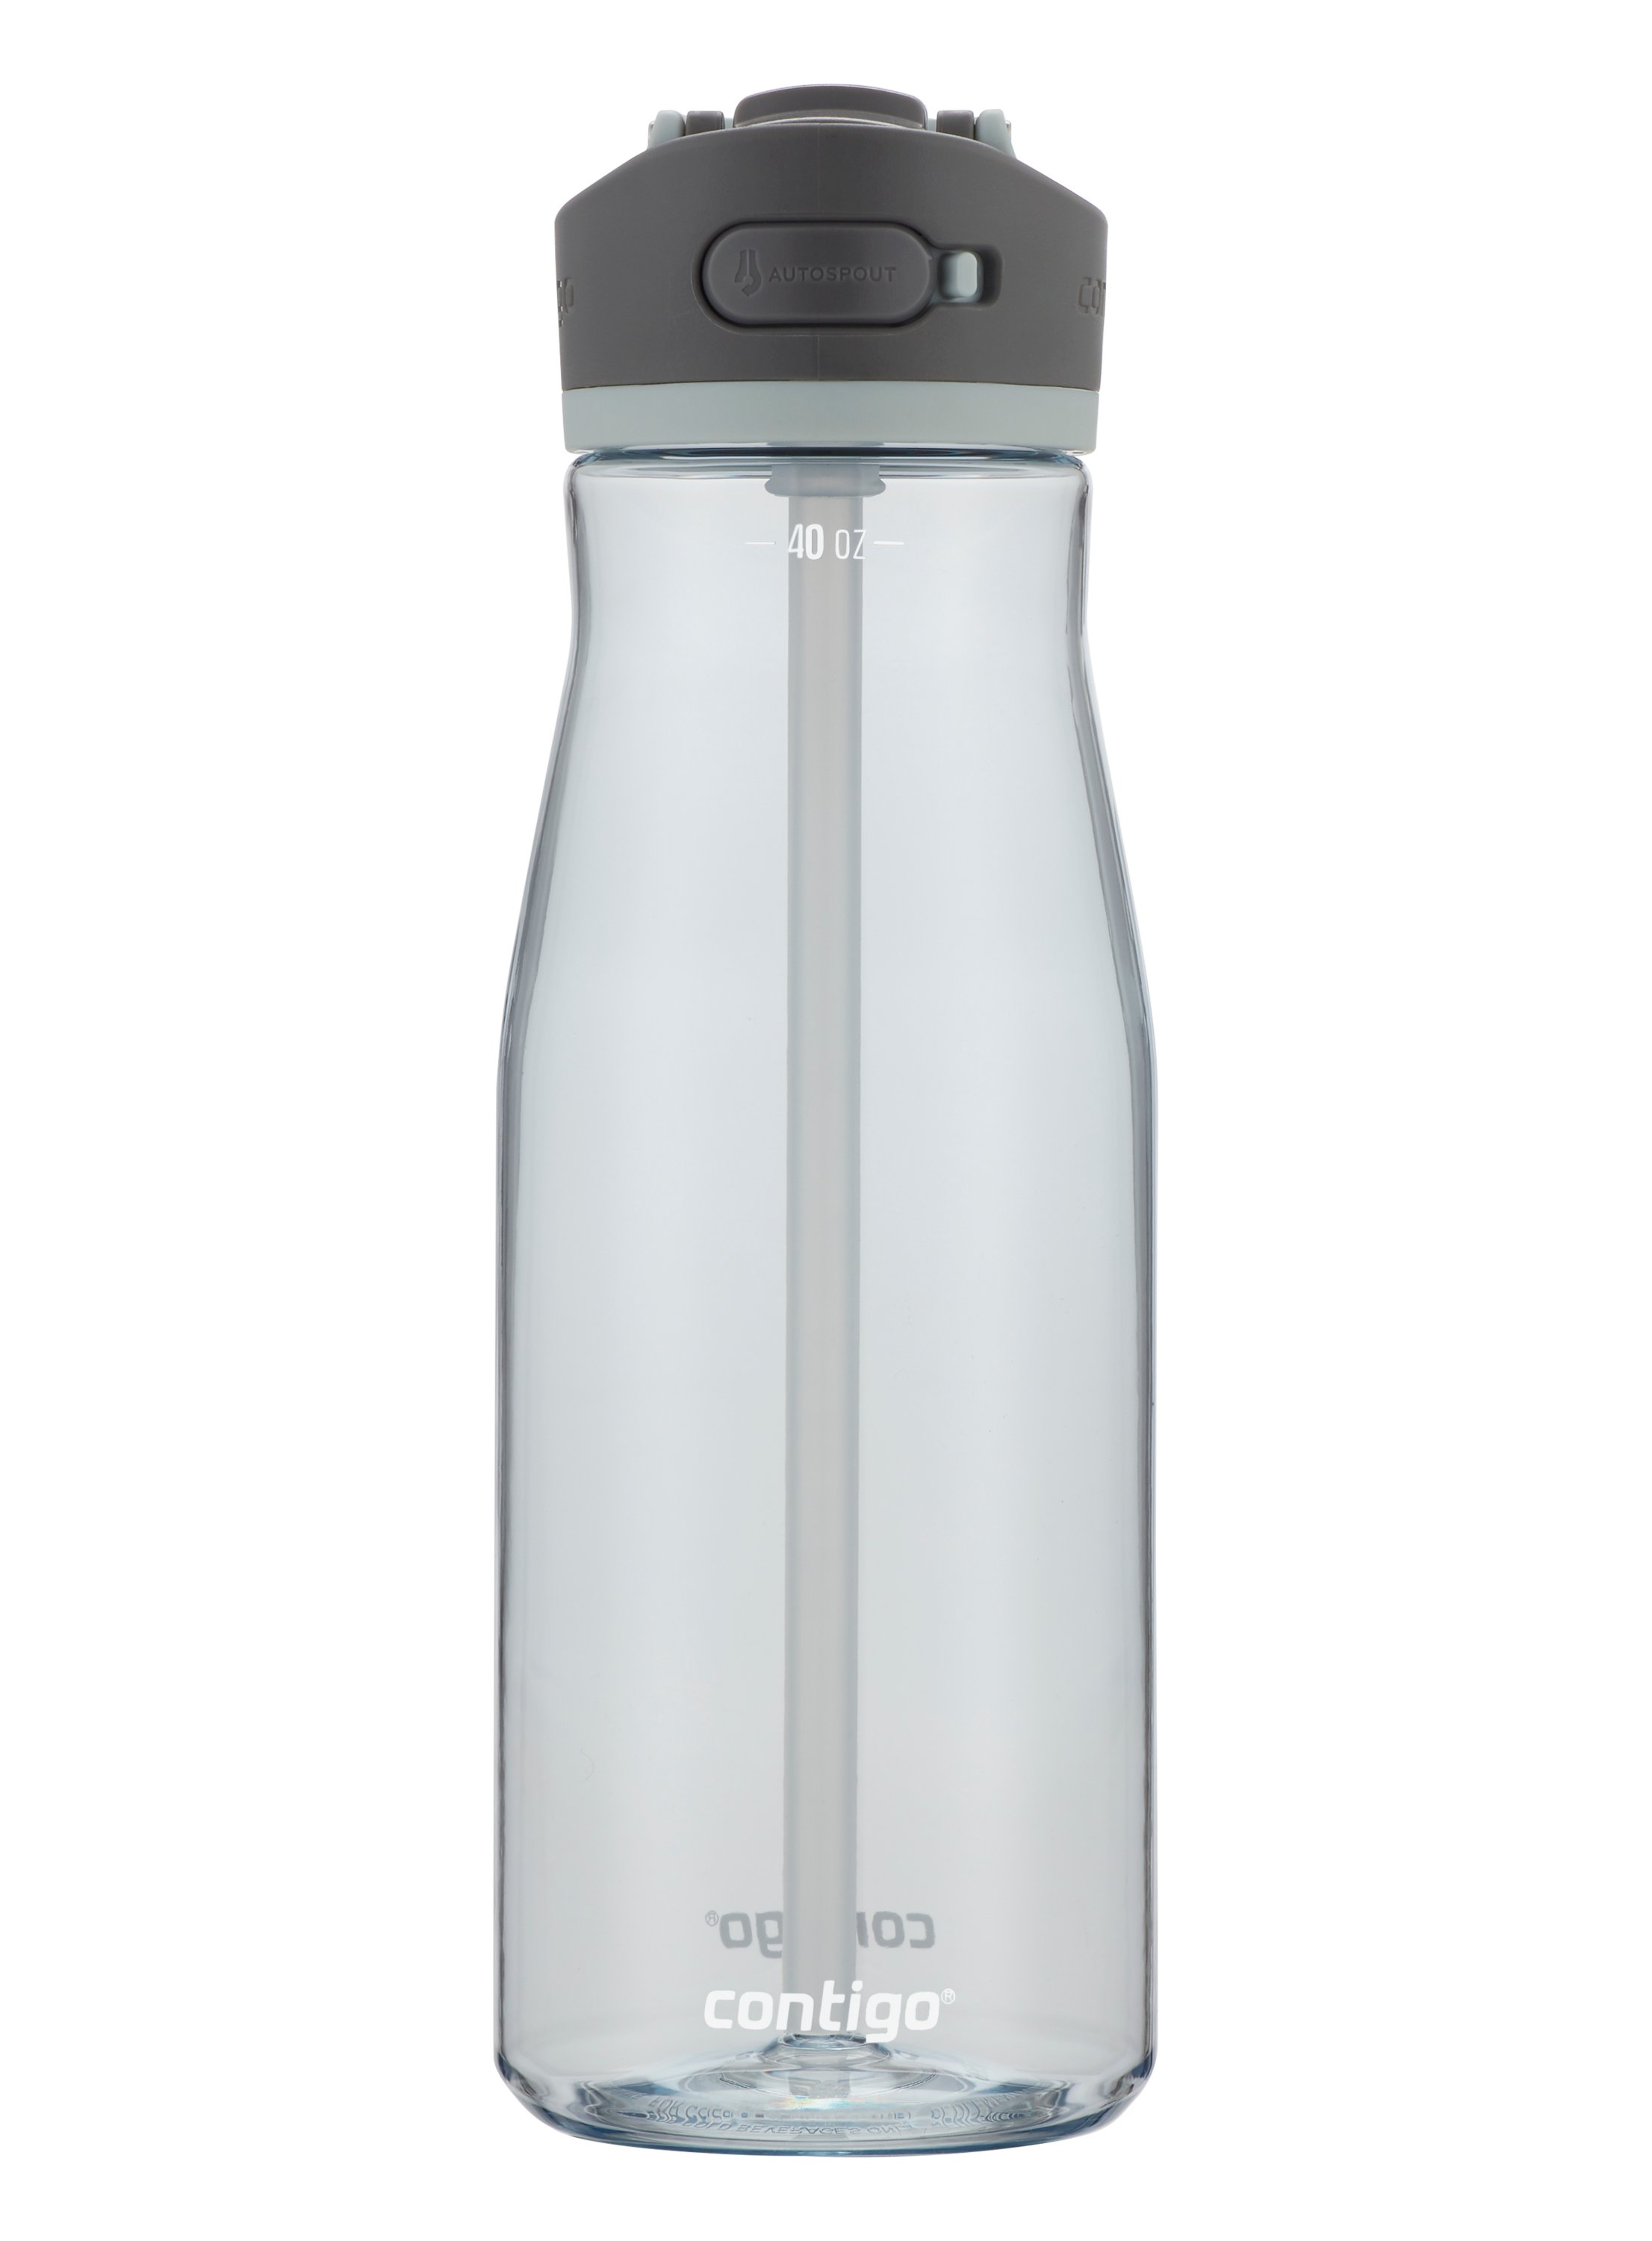 Two 40oz Contigo Water Bottles Brand New for Sale in Graham, WA